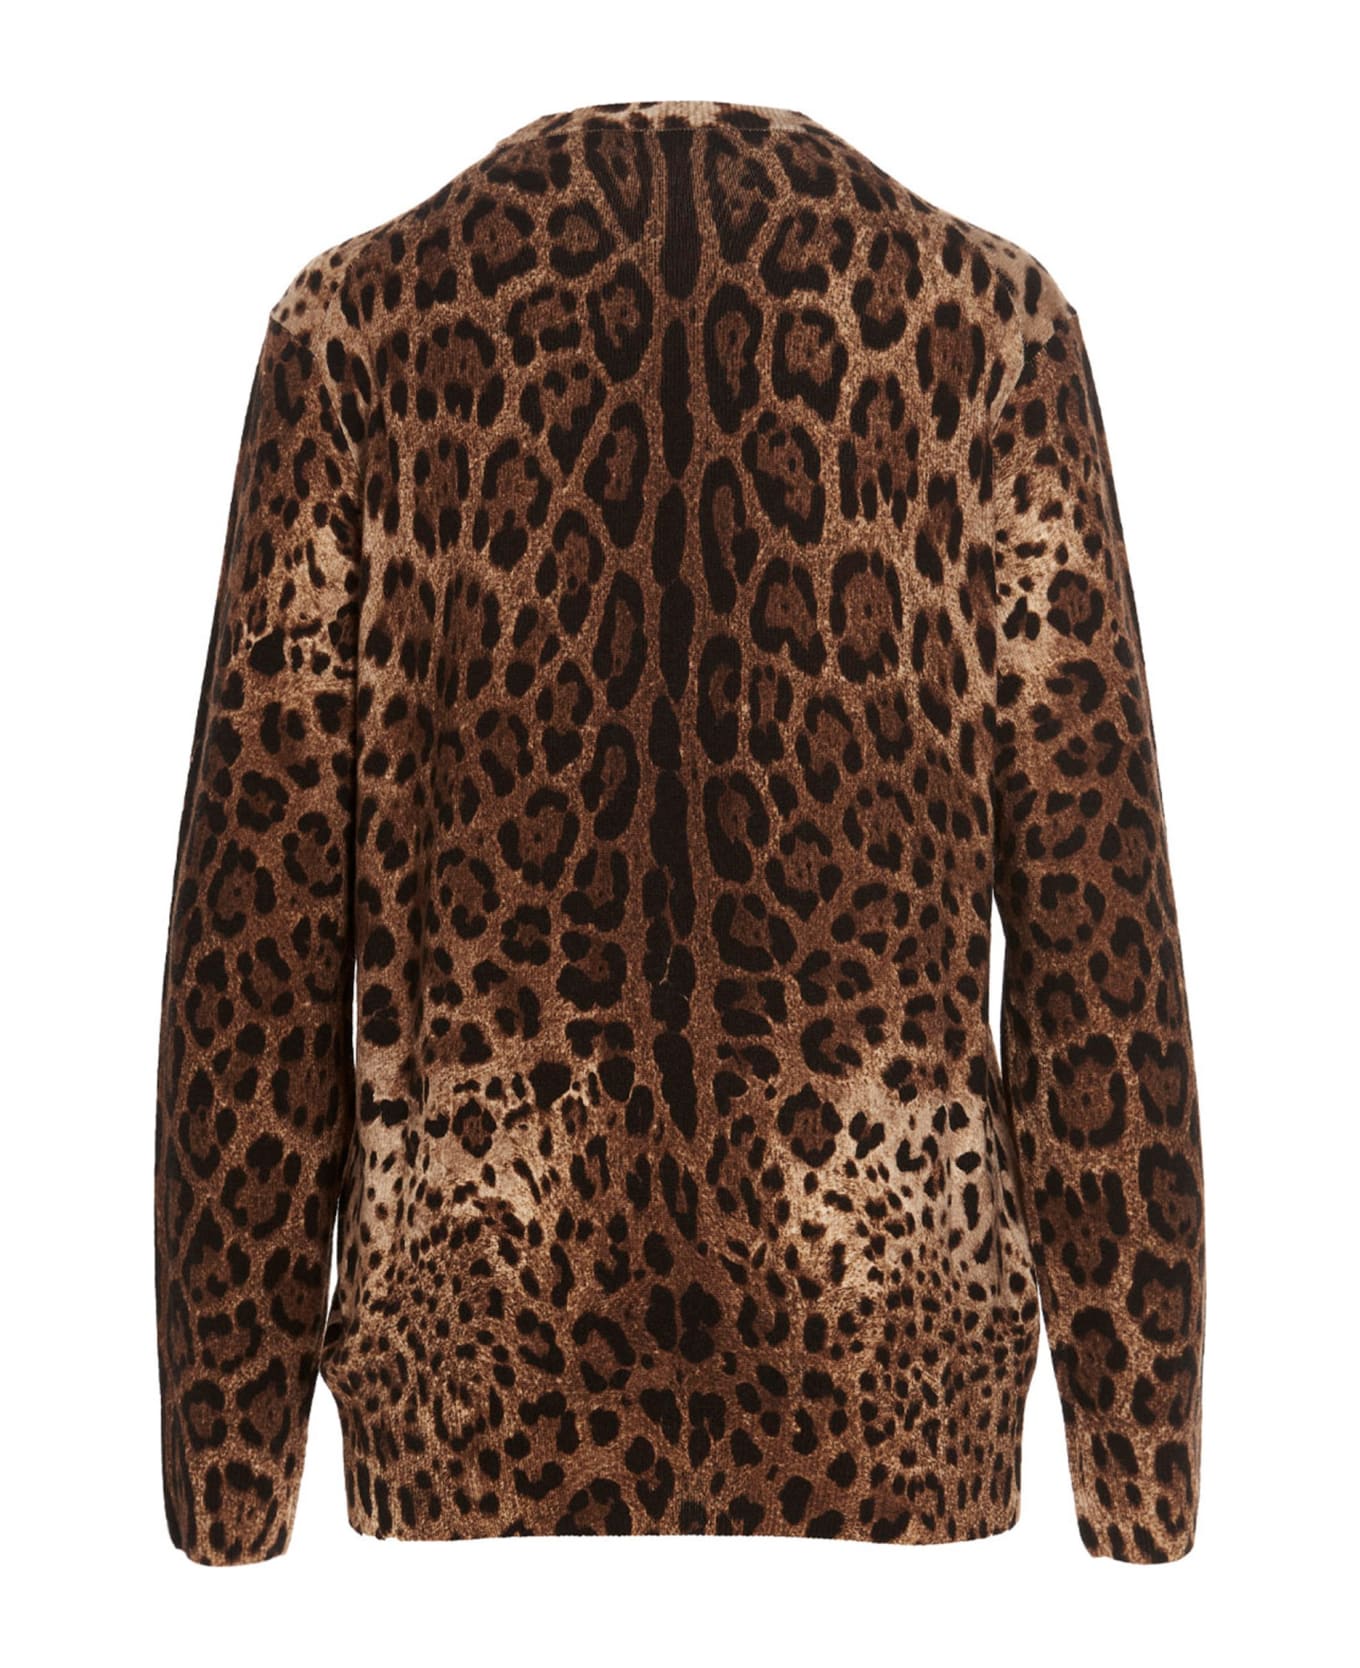 Dolce & Gabbana Animal Print Cashmere Sweater - Multicolor ニットウェア